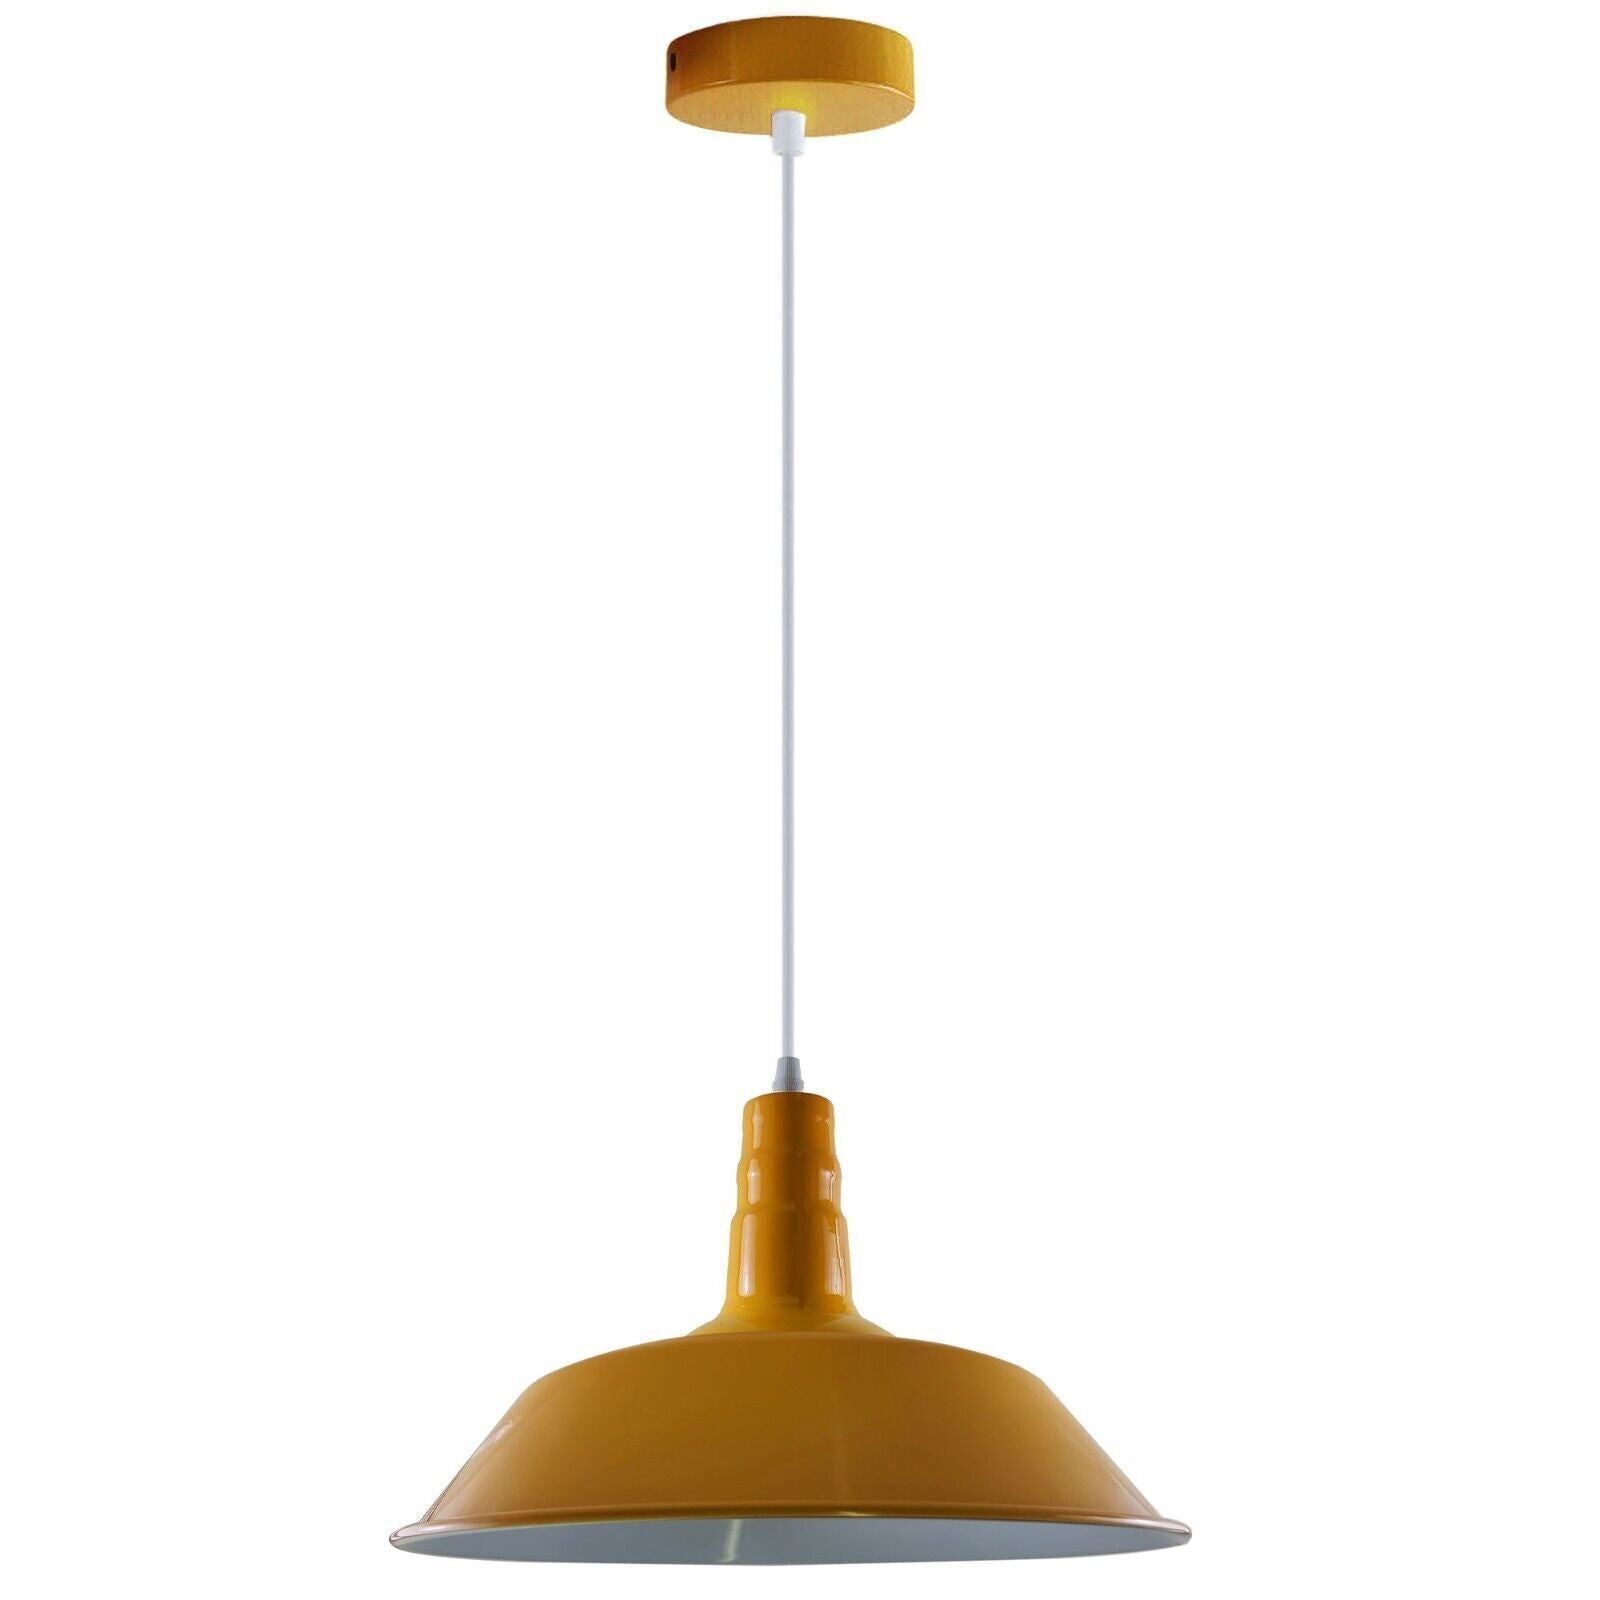 Modern Adjustable Hanging Bowl Yellow Pendant Lamp E27 Holder